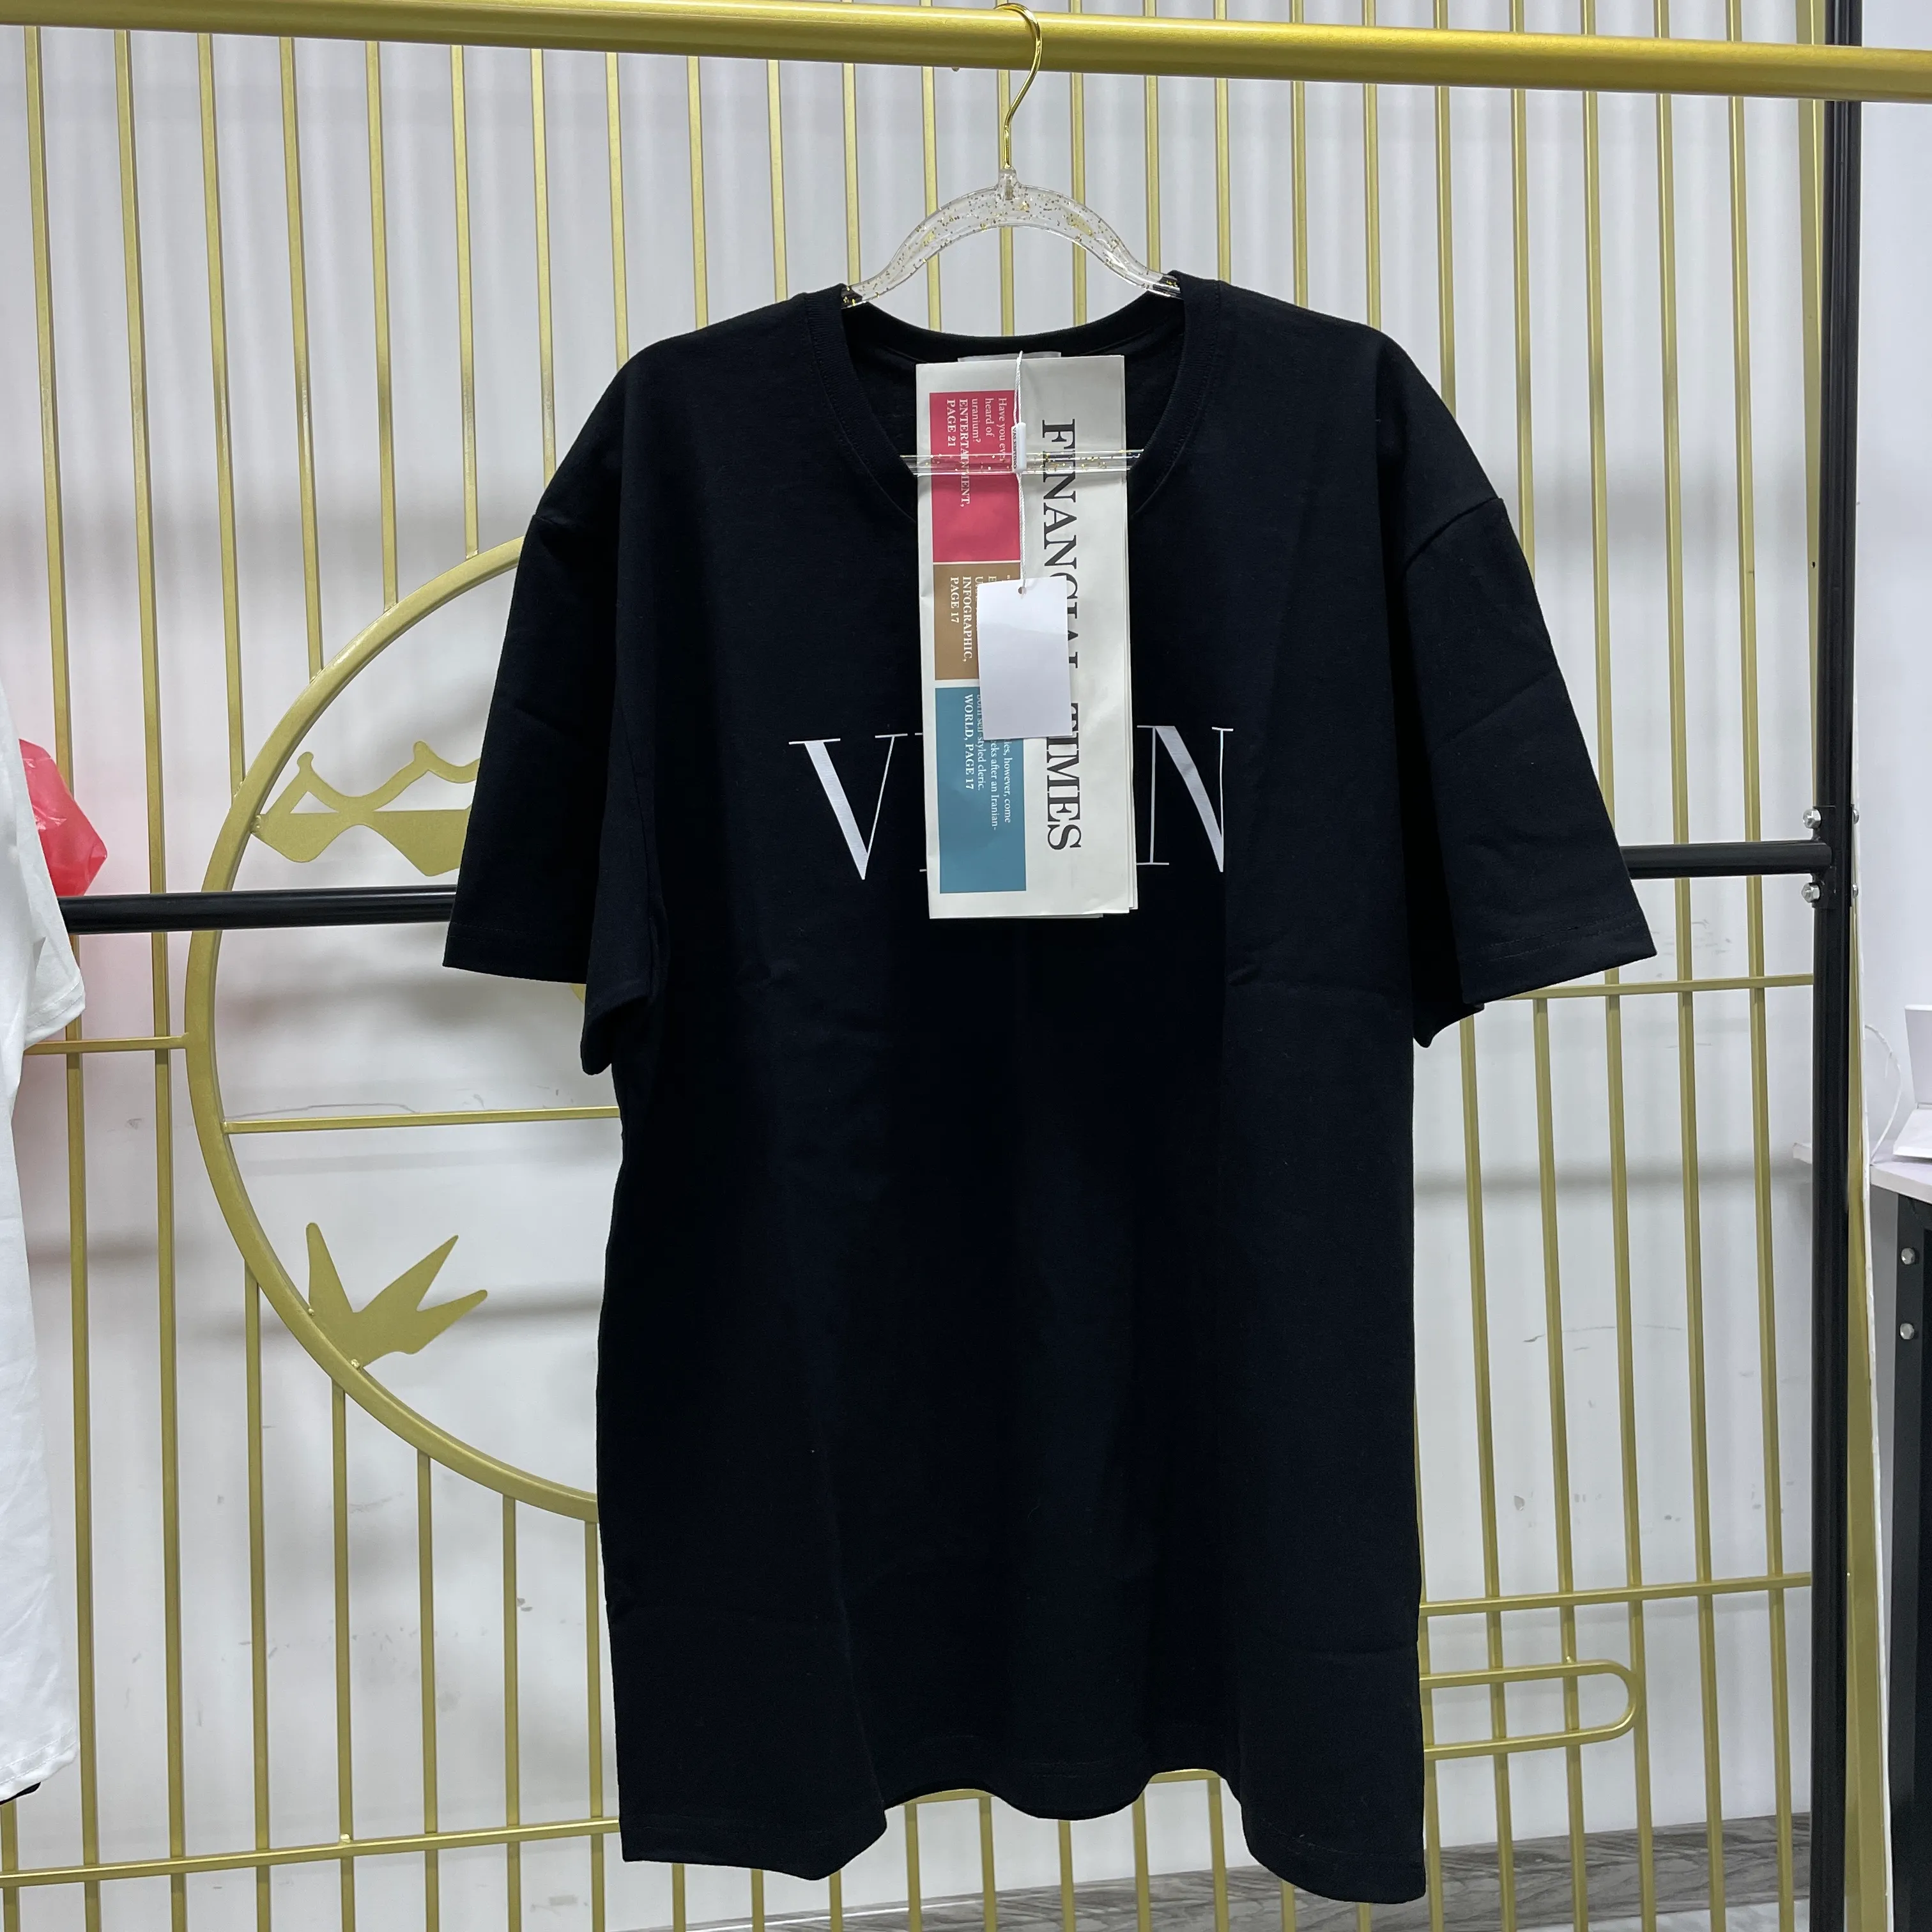 2023 New Fashion Men's Tees Designer Pattern Print T Shirts Black Style Polos T-Shirt Men Women Short Sleeve Tees S-4XL255U